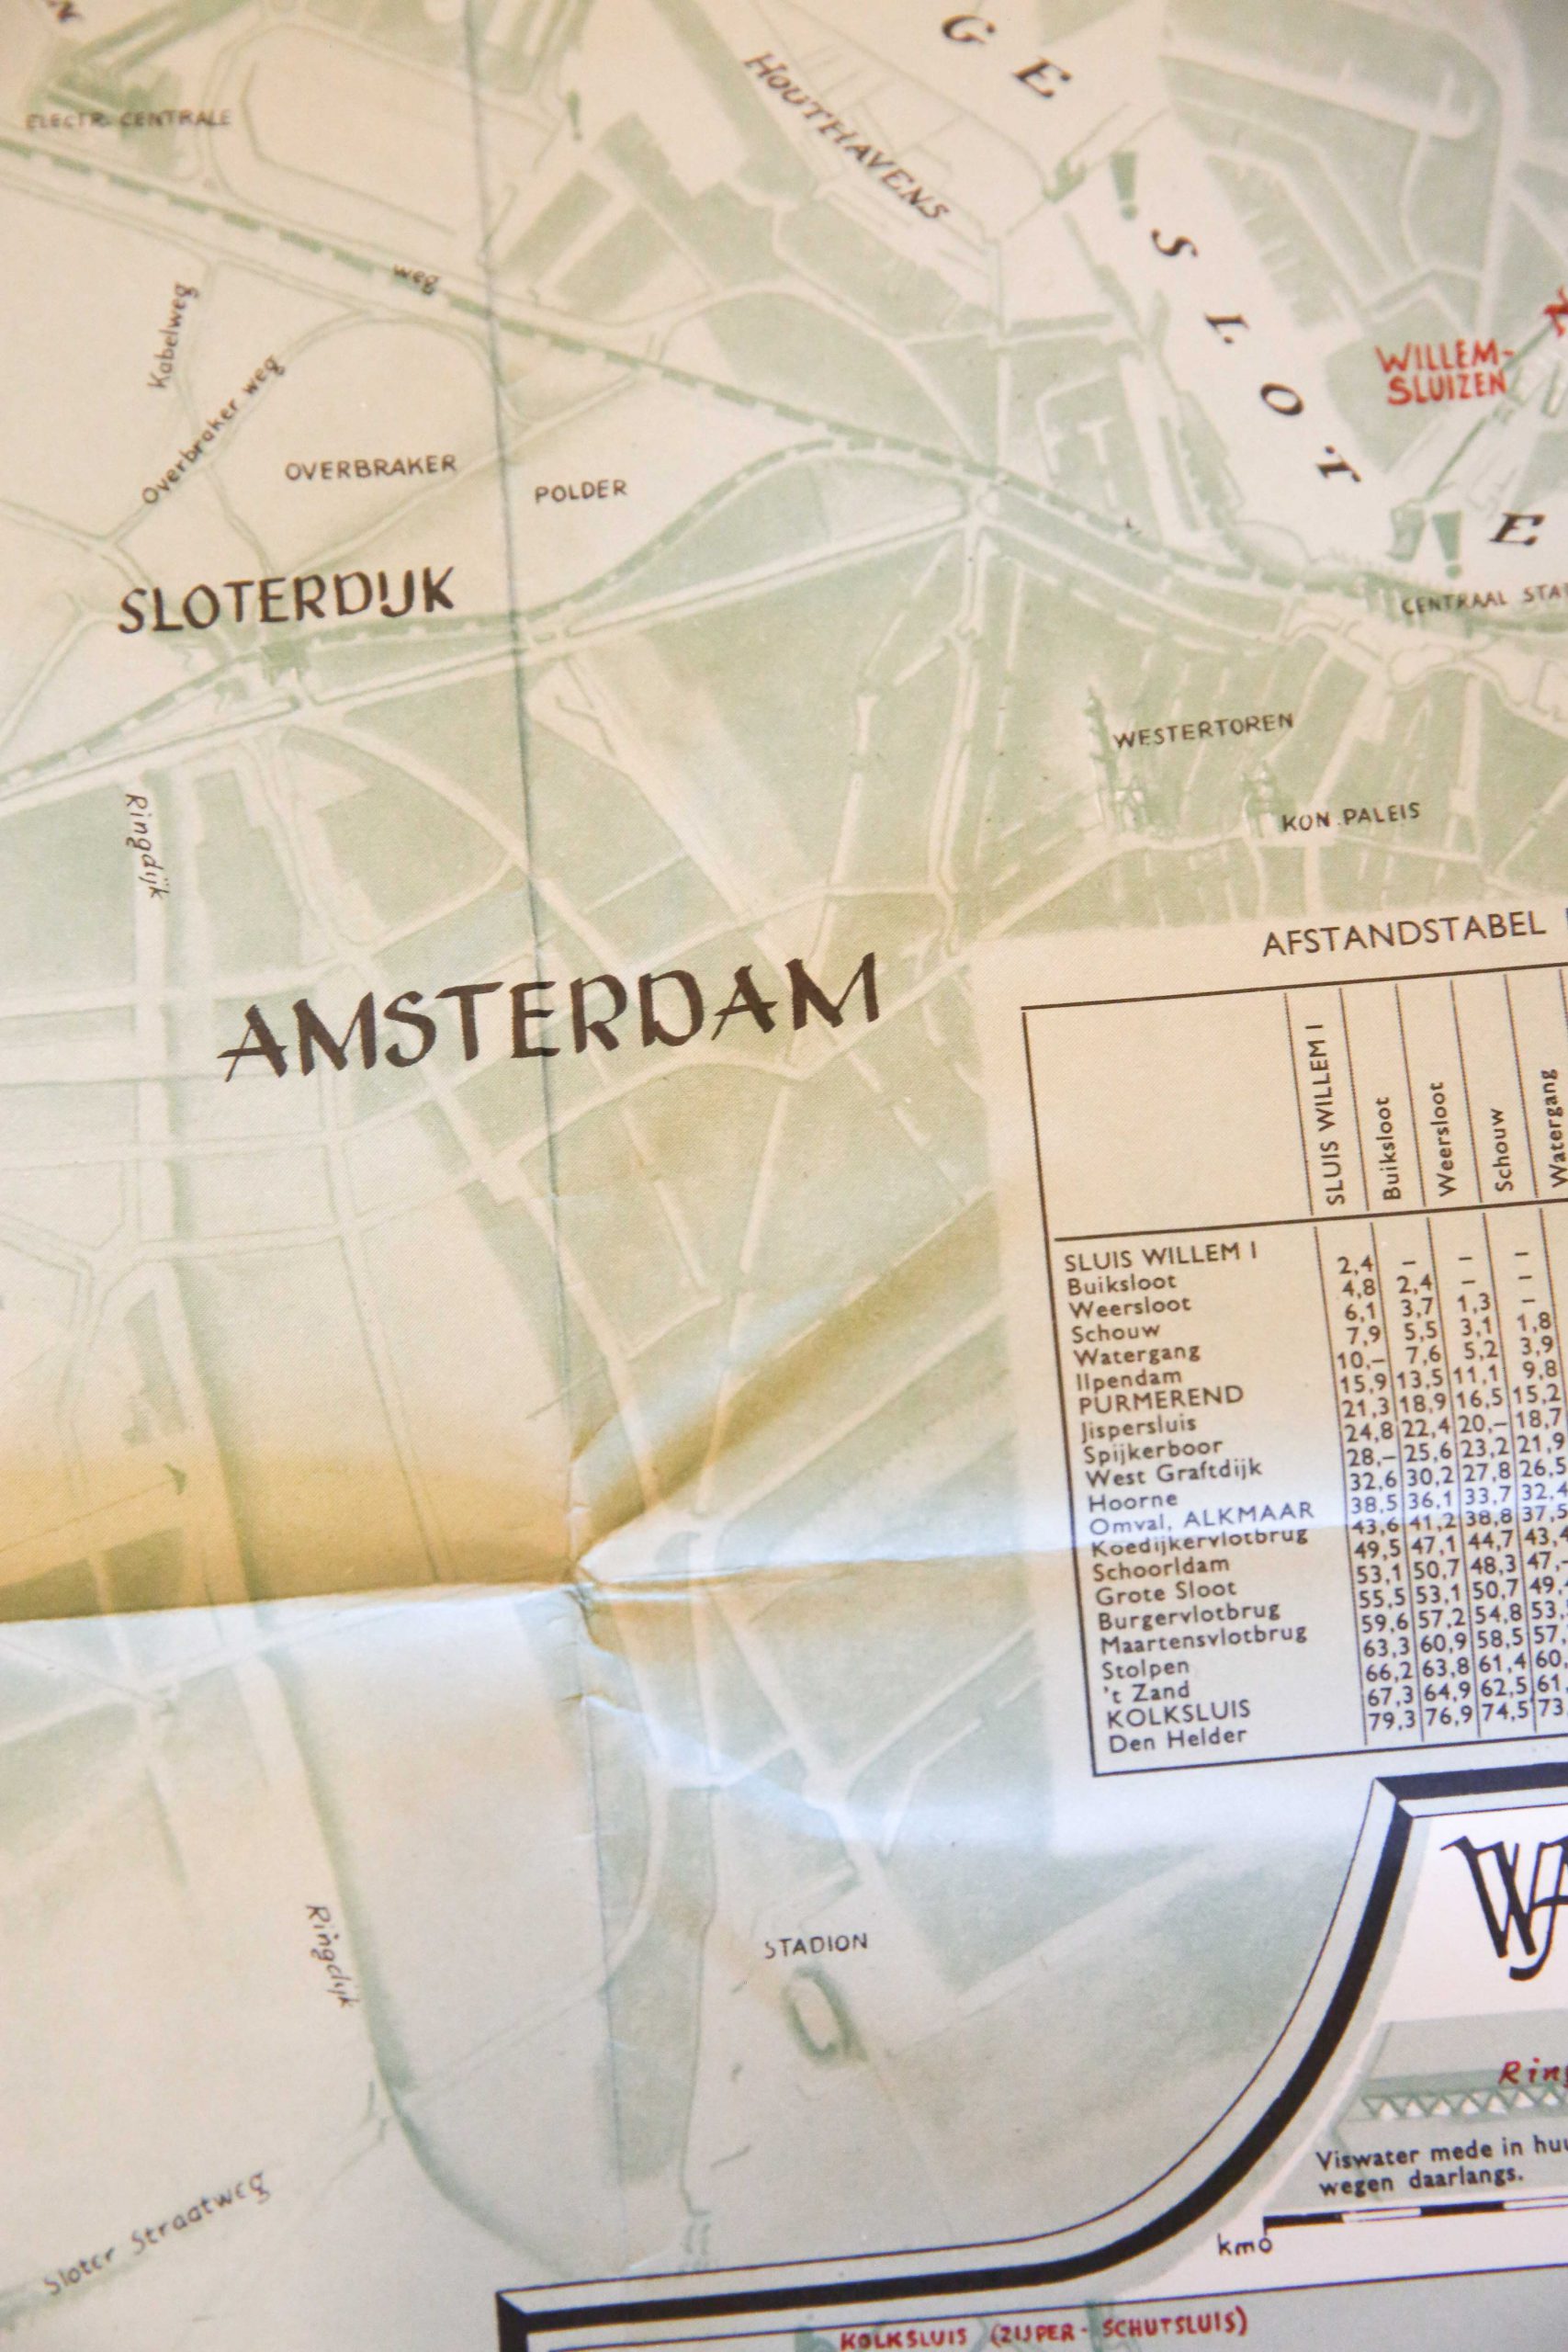 FIRST EDITION: Cartography/maps: Waterkaart van Hengelsport Vereniging Haarlem, Uitgave van Hengelsportvereniging "Haarlem", secretariaat: Rollandstraat 36 Haarlem. Ontwerp en tekening: Adv. Bur. v. Cartografische Vormgeving, F.W. Michels Amsterdam. Letters: G.C. v. Norden, Loosdrecht. Druk: Mouton & Co, den Haag, EERSTE DRUK: 1958. Copyrights: H.V.H. en A.C.V. Michels. 102 x 79 cm.